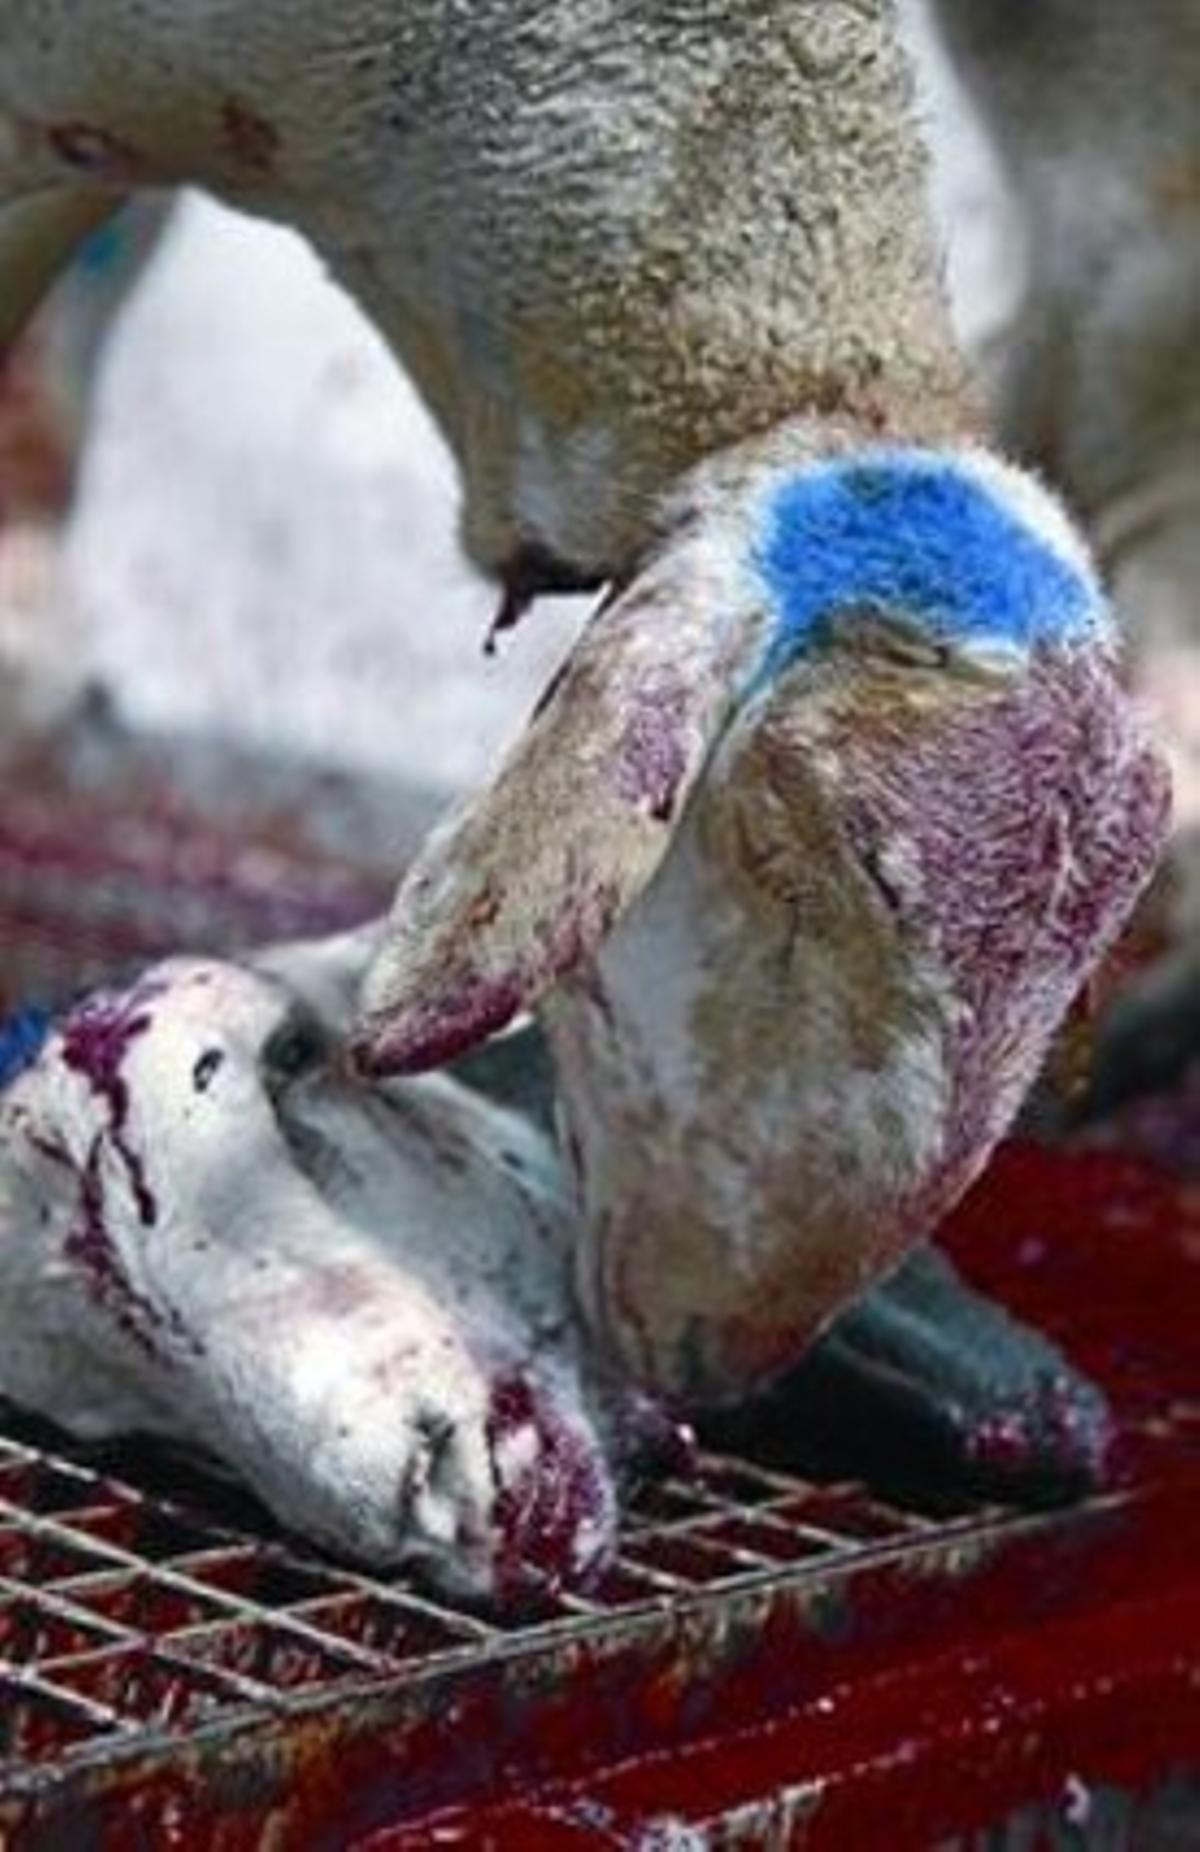 Corderos sacrificados a la manera ’halal’, ayer en el mataderode Girona.